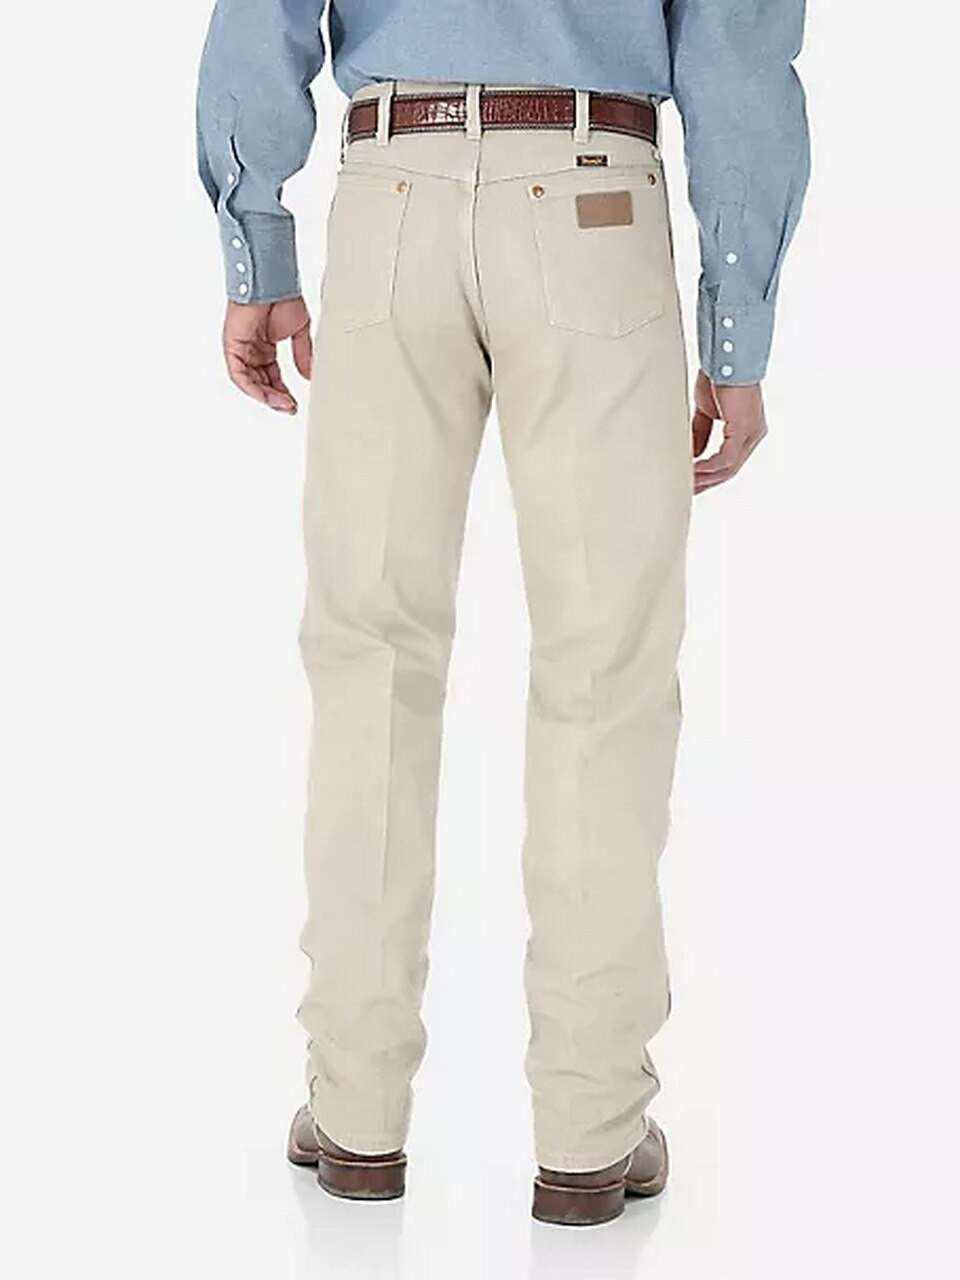 Positiv Træts webspindel Lære udenad Wrangler Cowboy CutÂ® Men's Original Fit Tan Jeans